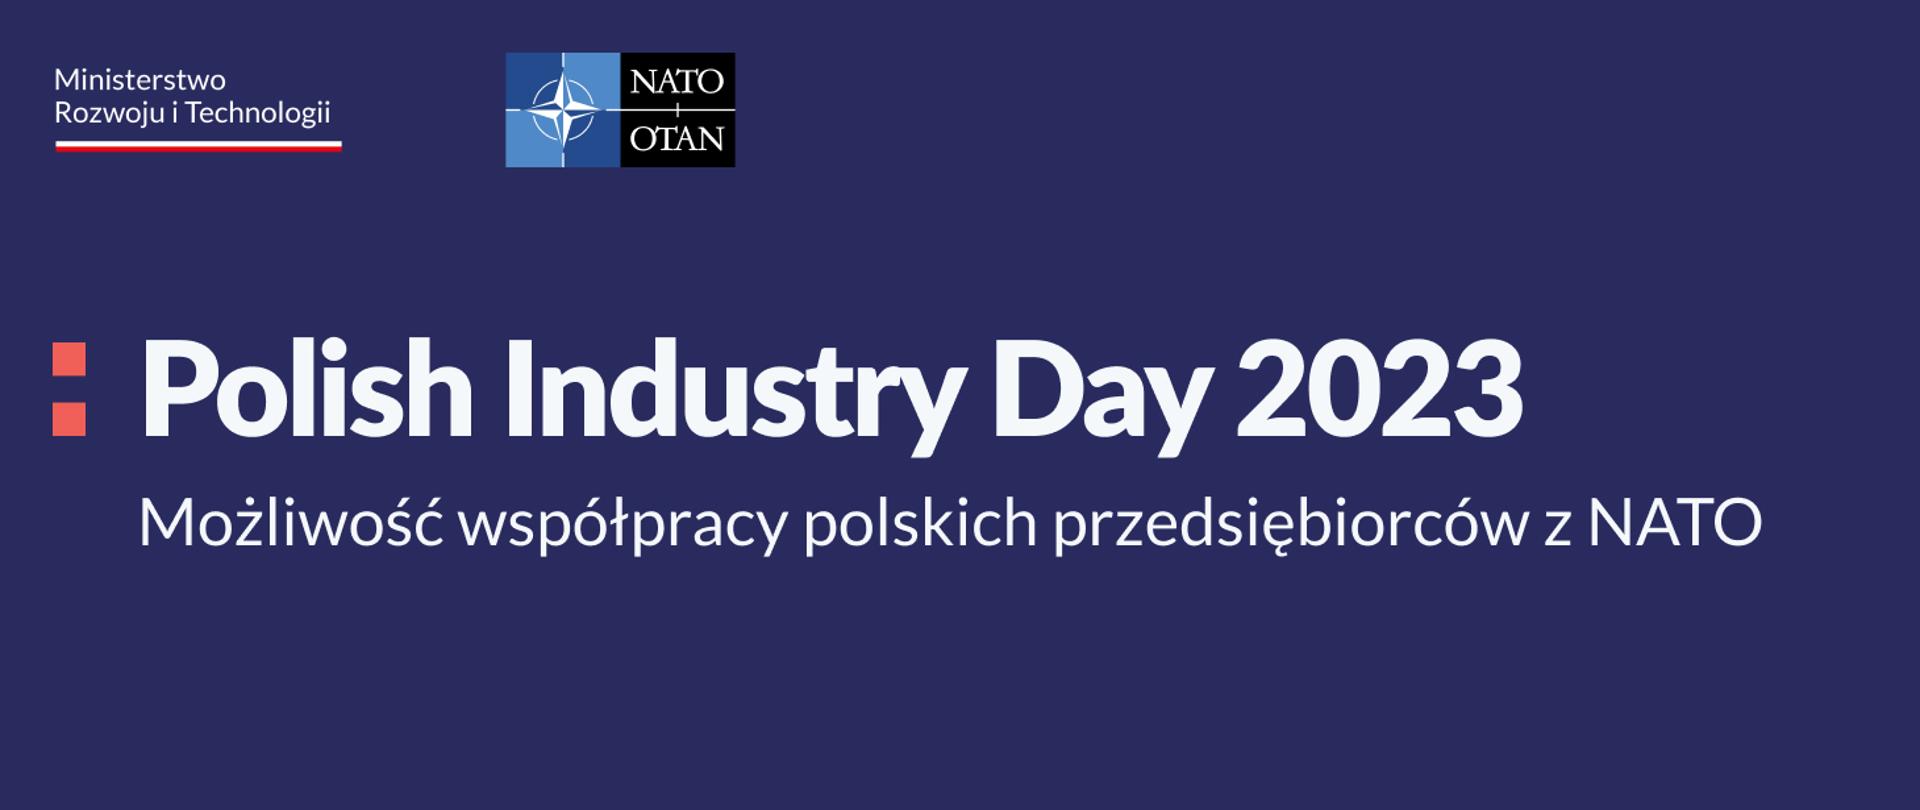 Polish Industry Day 2023